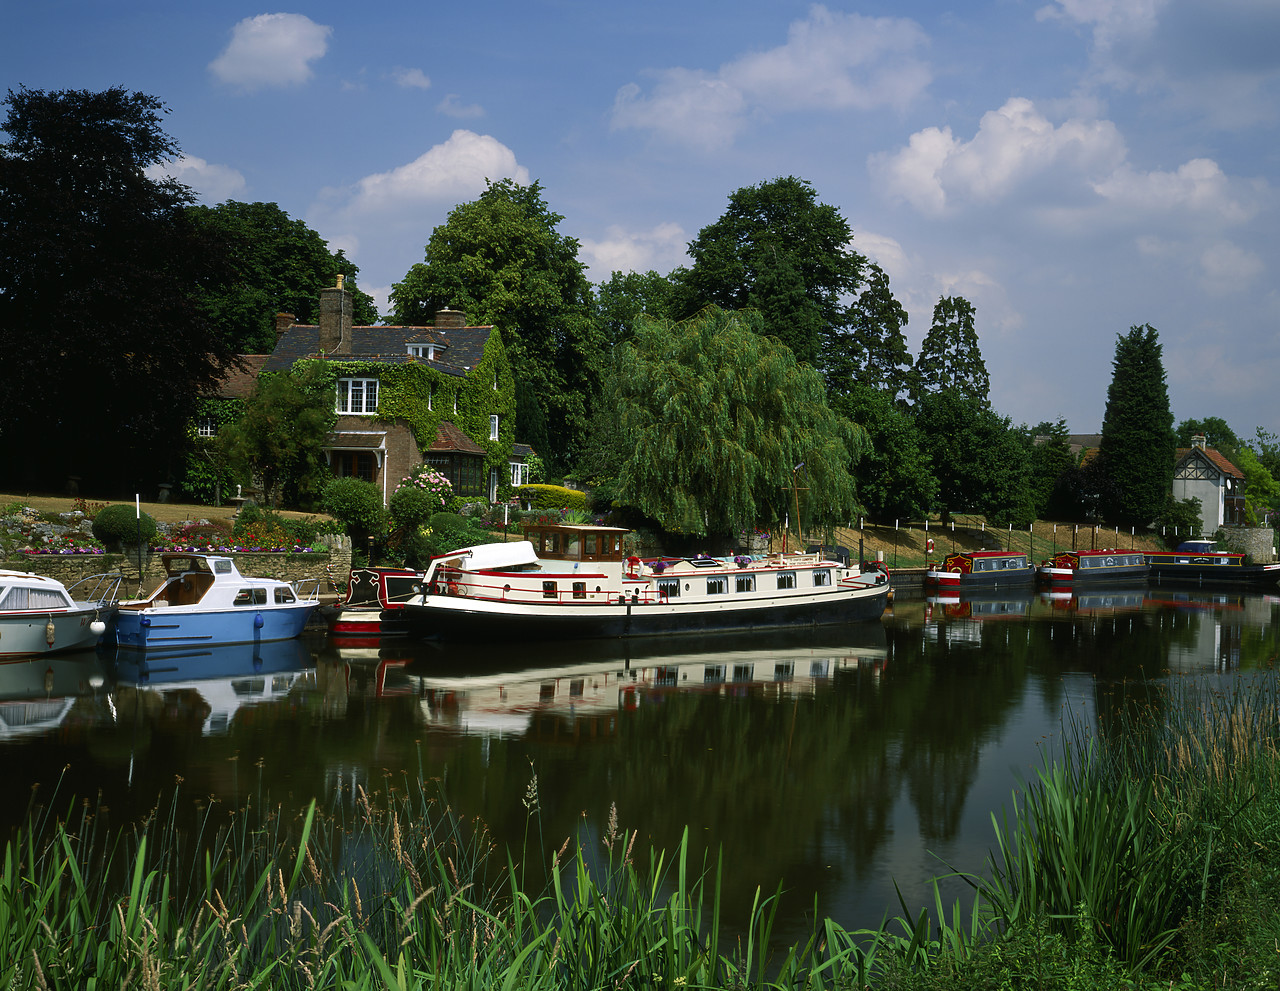 #944801-3 - Canal Boats along the river Avon, Bidford-on-Avon, Warwickshire, England